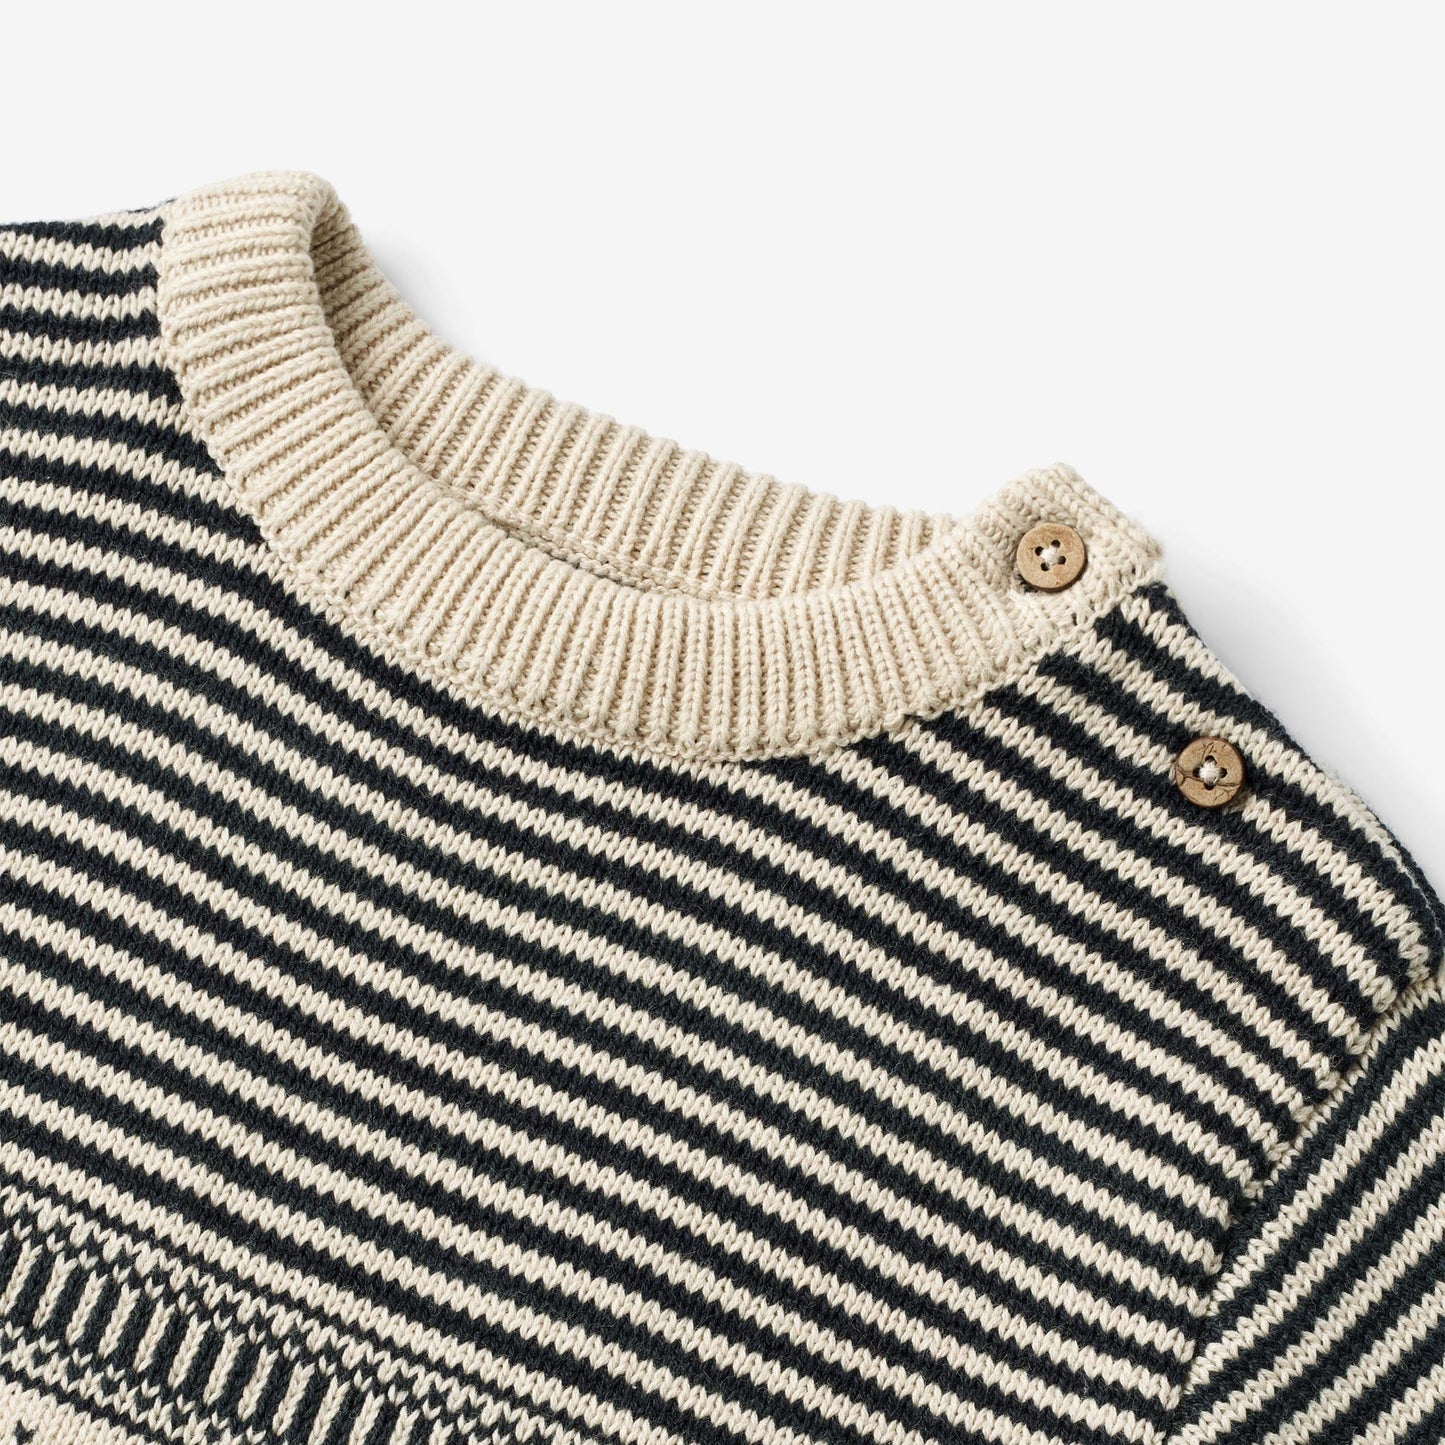 Wheat 'Janus' Baby Knit Pullover - Navy